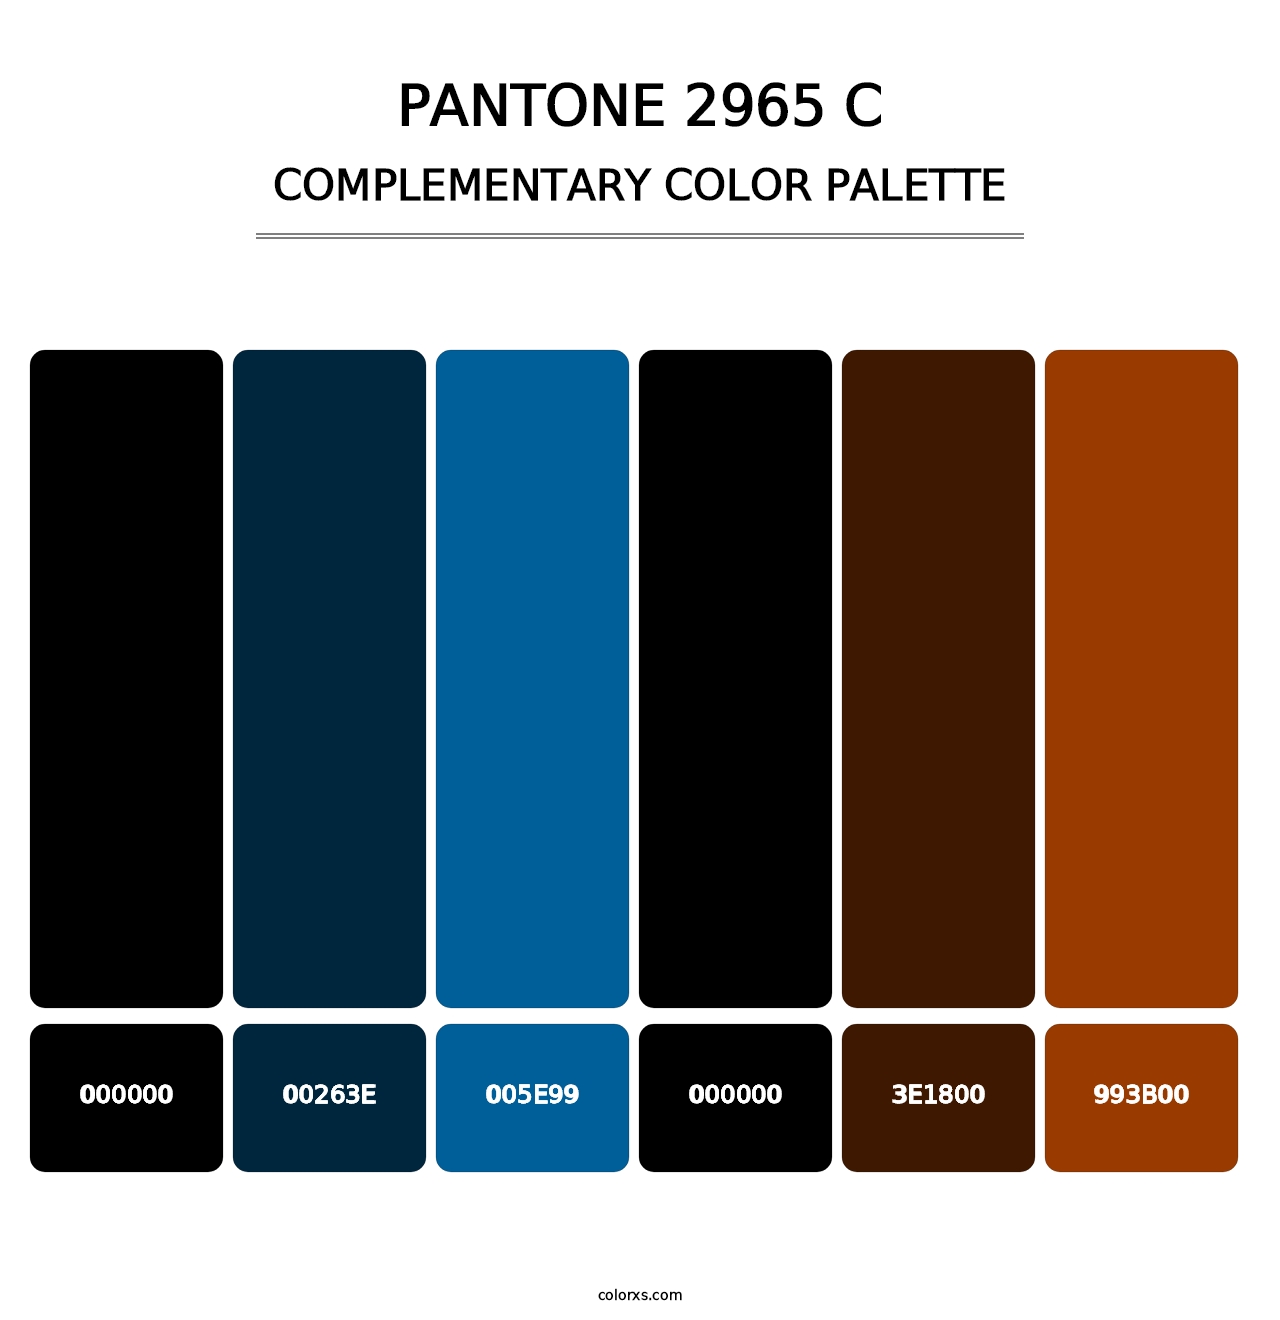 PANTONE 2965 C - Complementary Color Palette